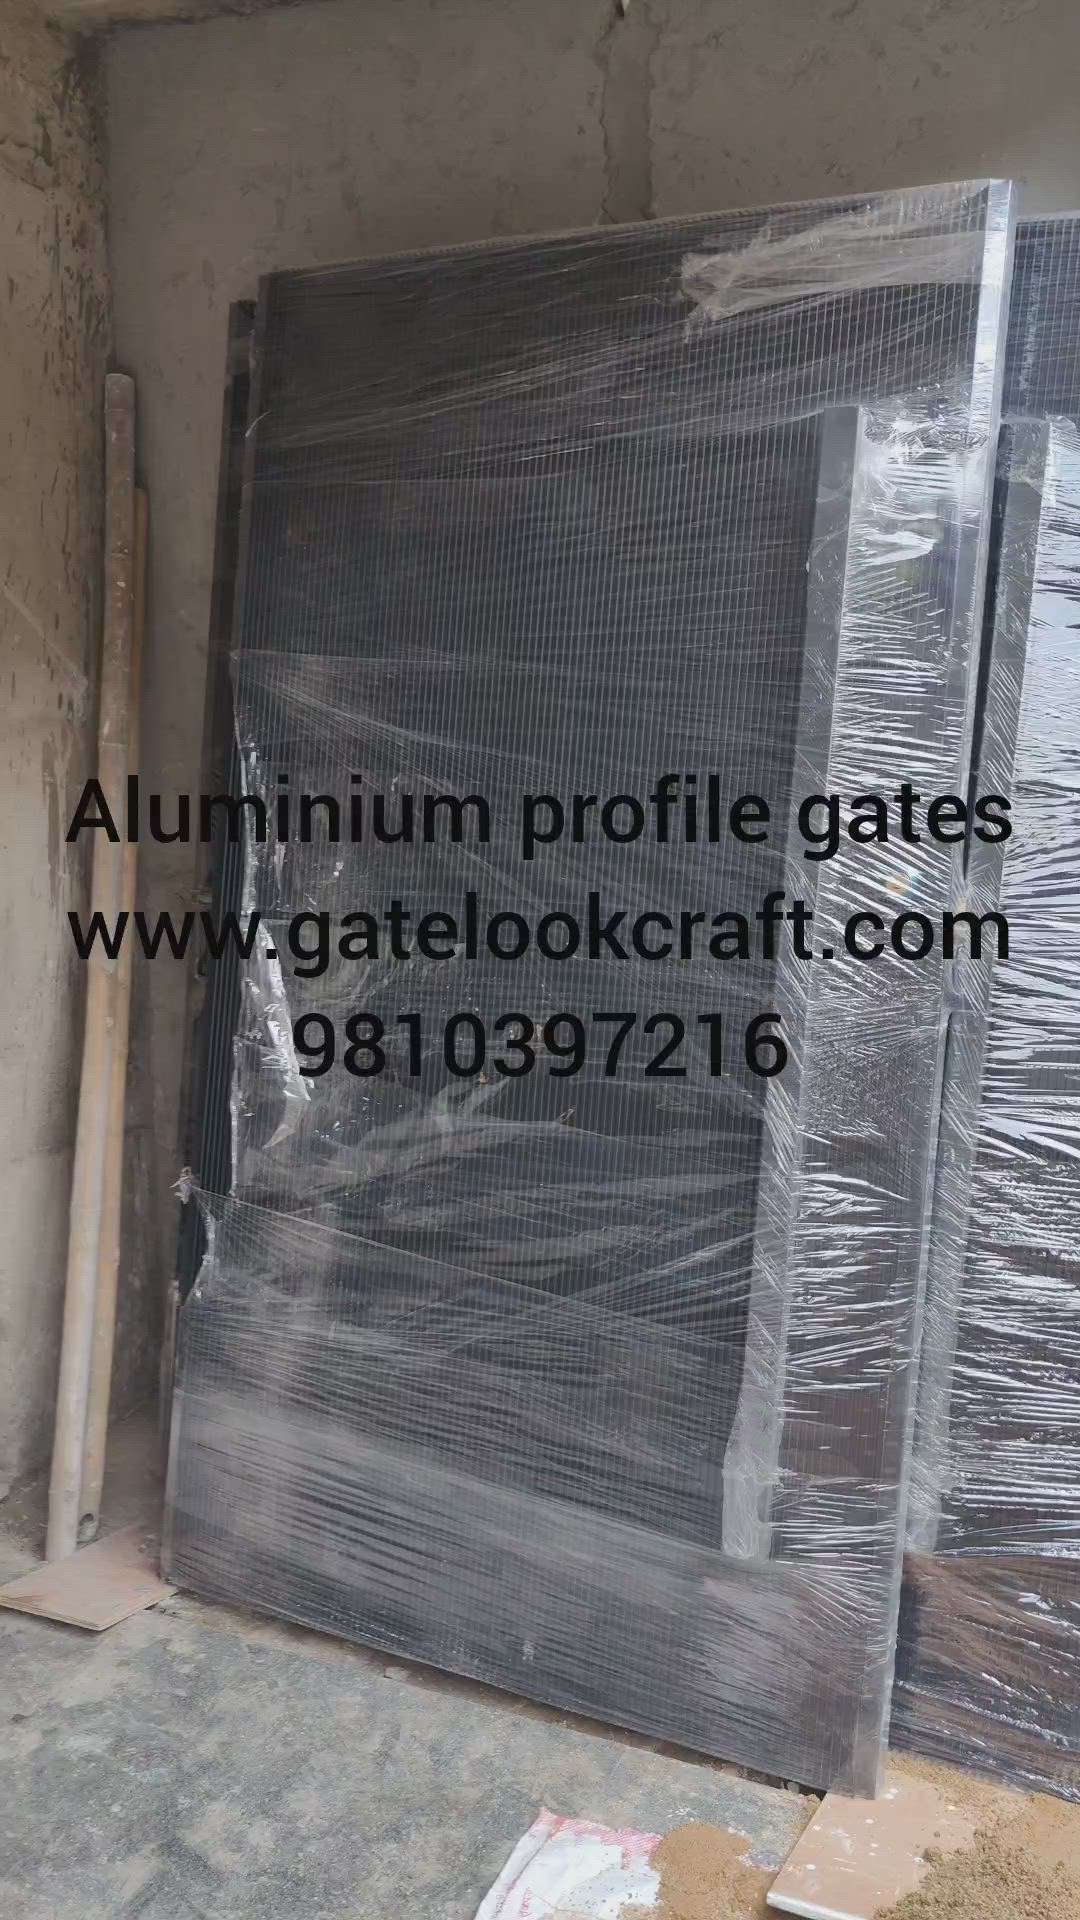 Aluminium profile gates by Hibza sterling interiors pvt ltd manufacture in Delhi #gatelookcraft #aluminiumprofilegates #aluminiumgates #panelgates #maingates #fancygates #designergates #housegates #gates